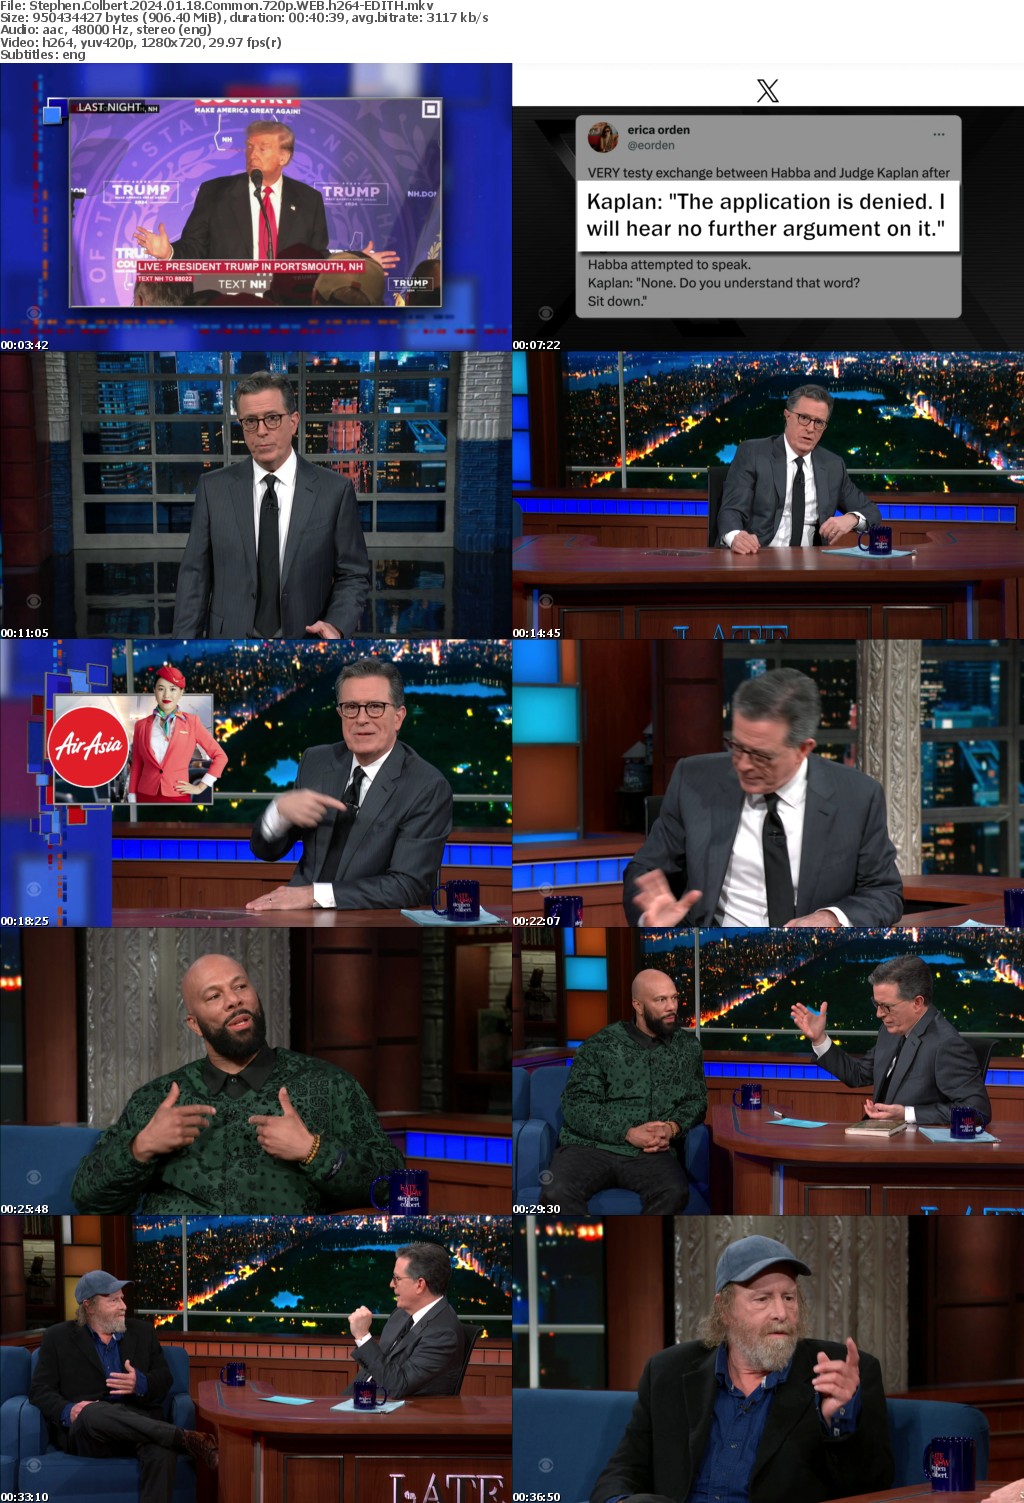 Stephen Colbert 2024 01 18 Common 720p WEB h264-EDITH